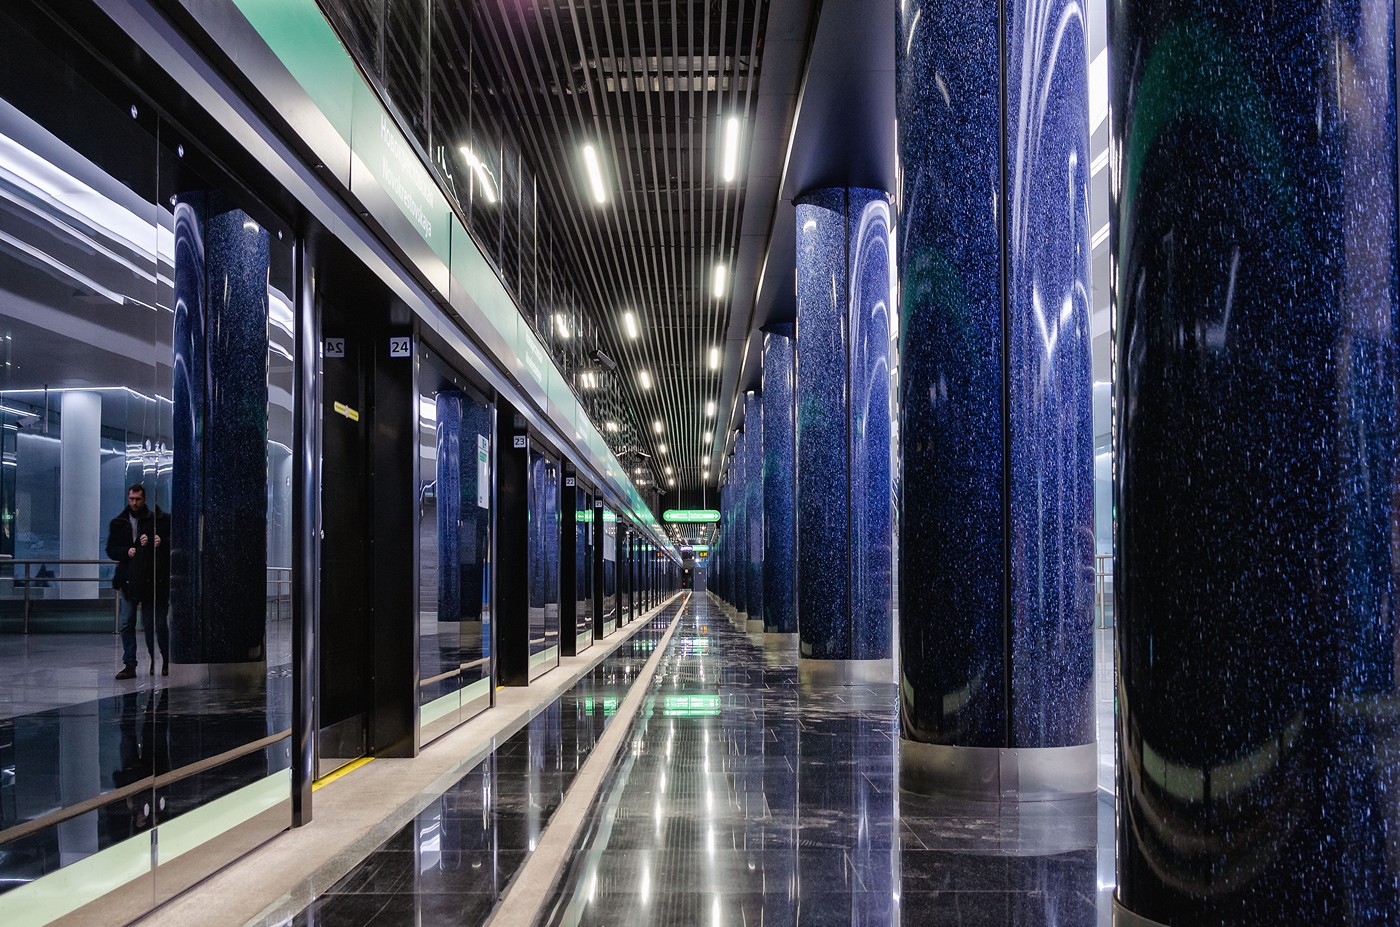 Станция метро зенит санкт петербург